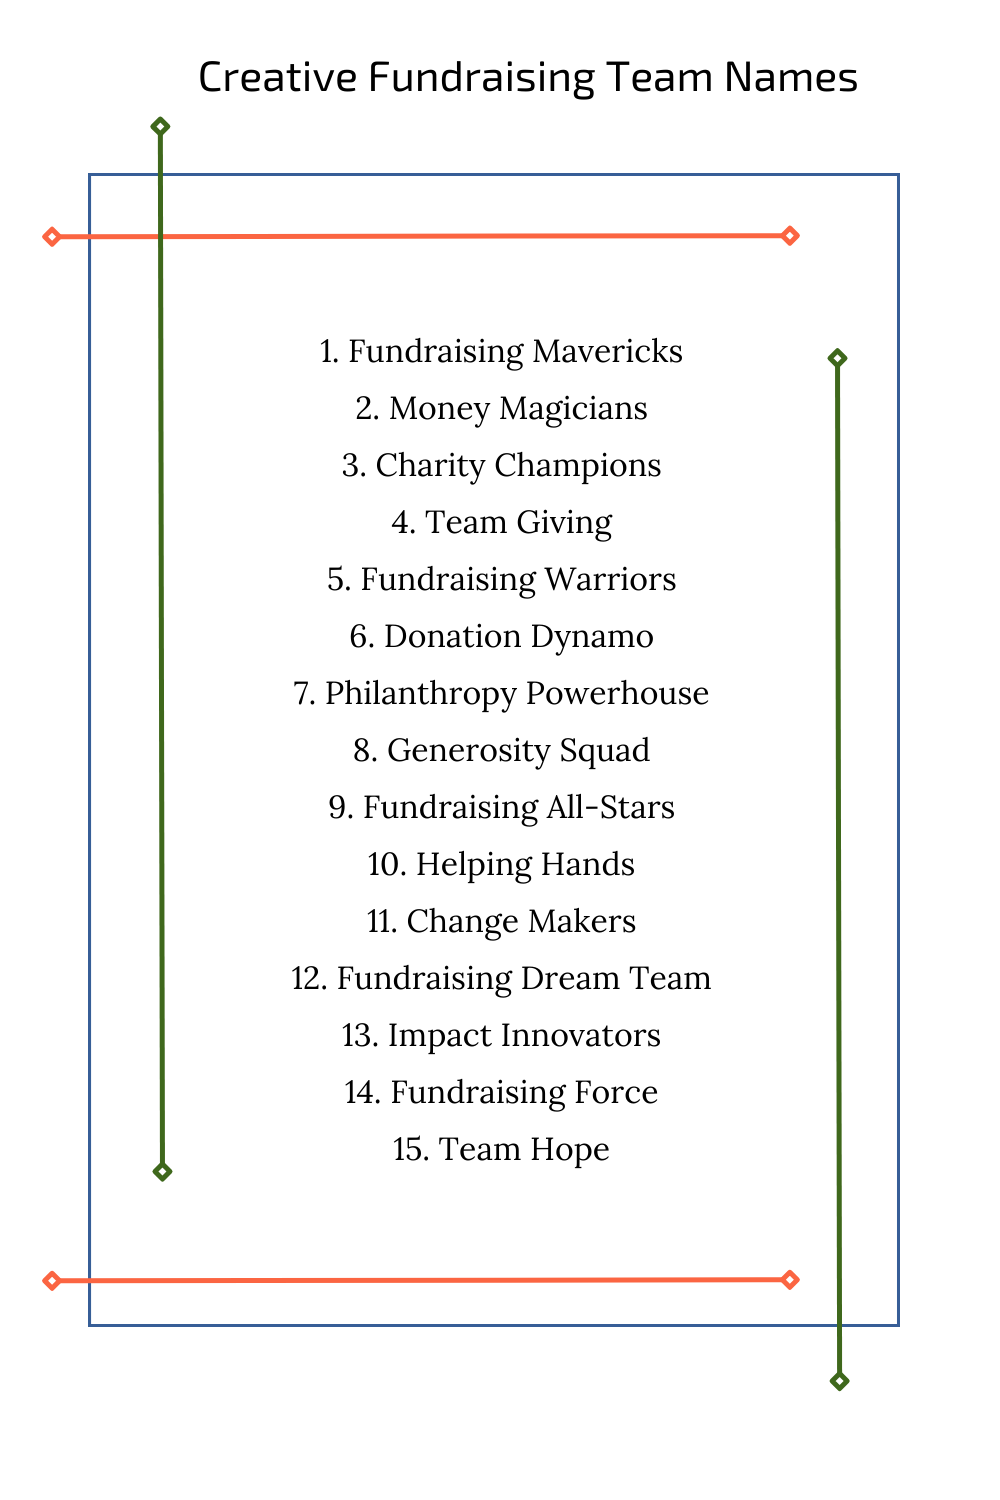 Creative Fundraising Team Names